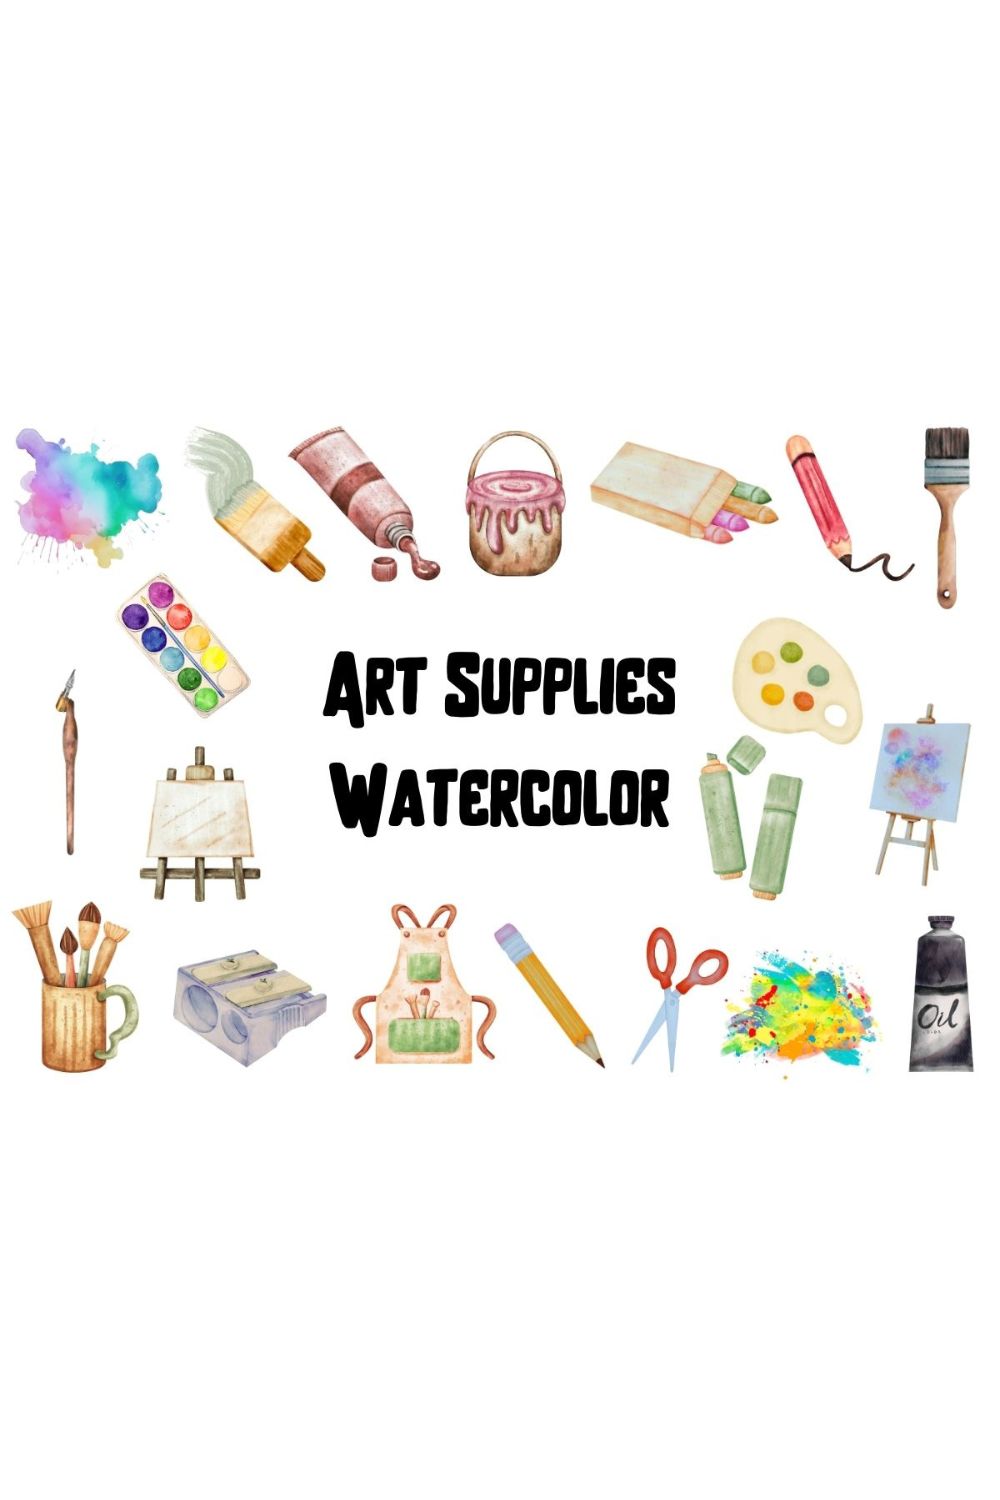 Watercolor Art Supplies Clipart pinterest preview image.